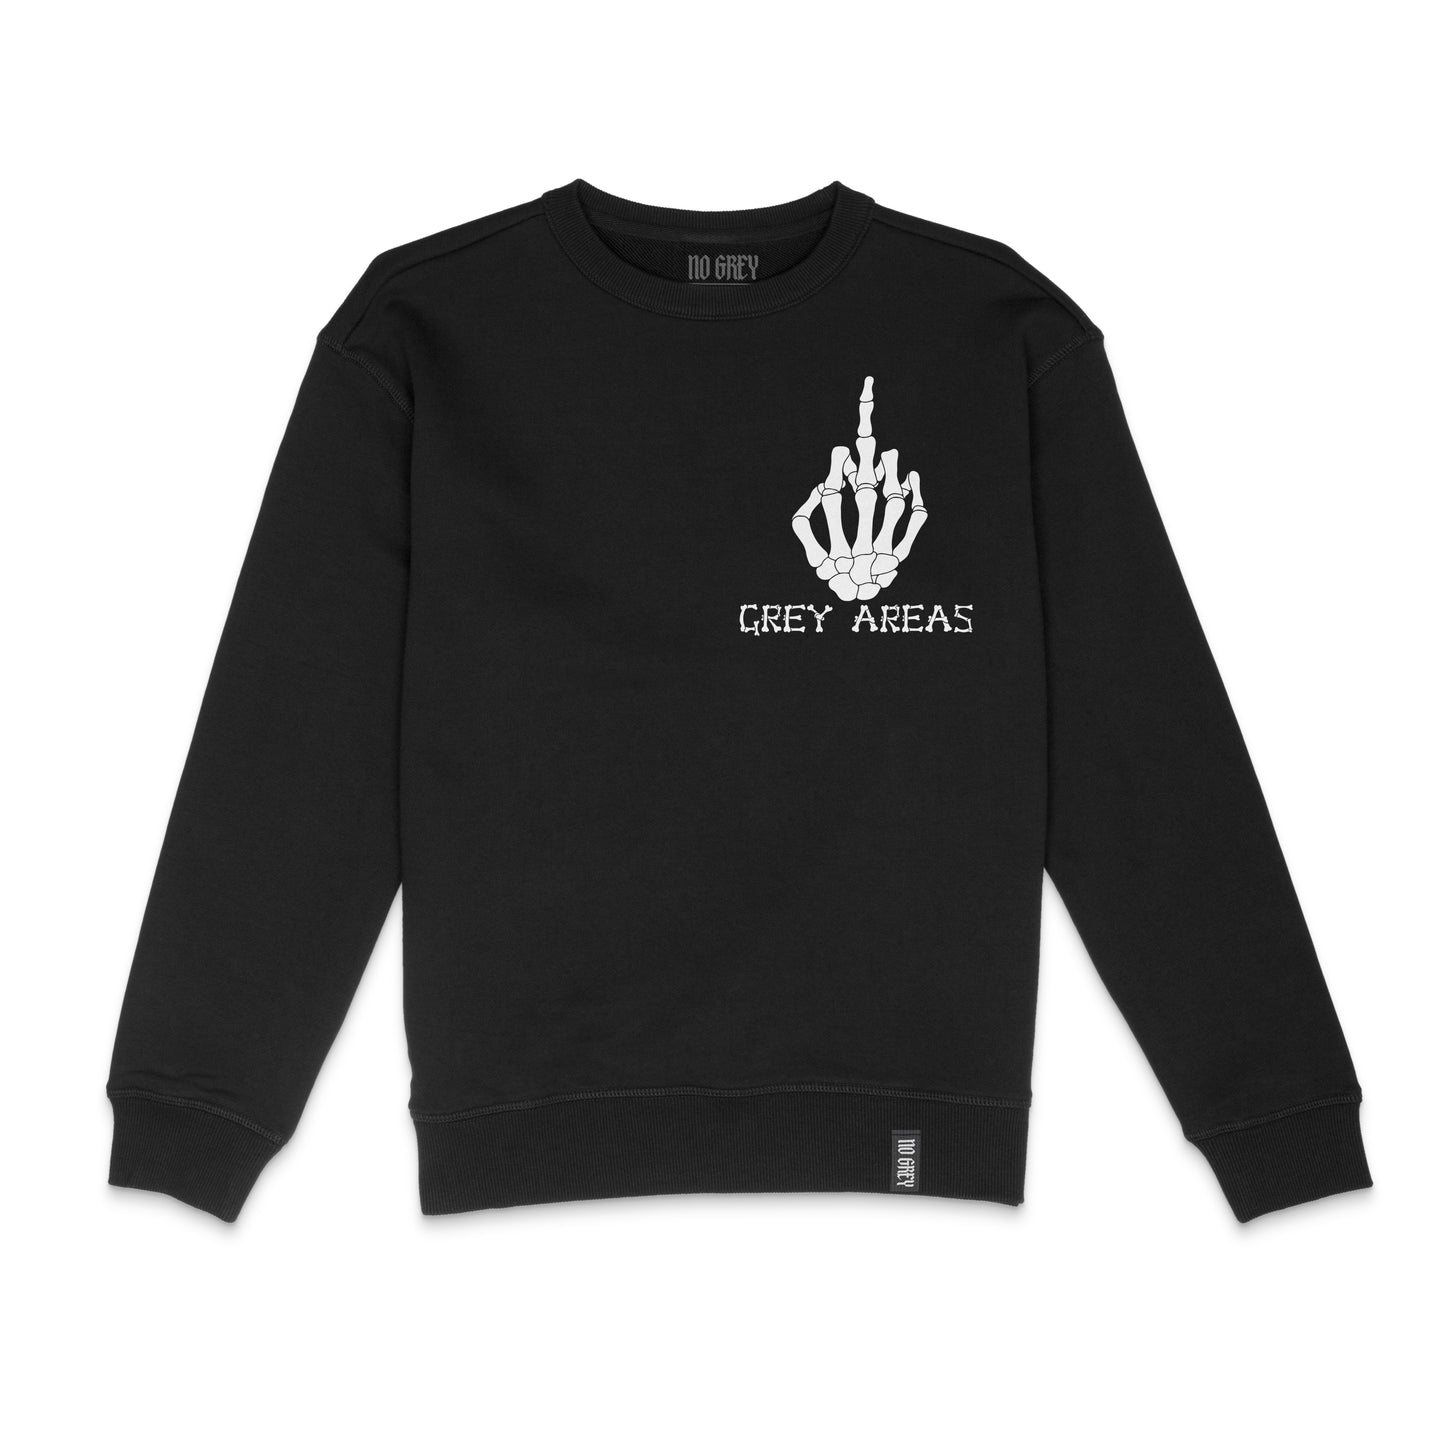 F*** Grey Areas - Premium Sweatshirt (Black)